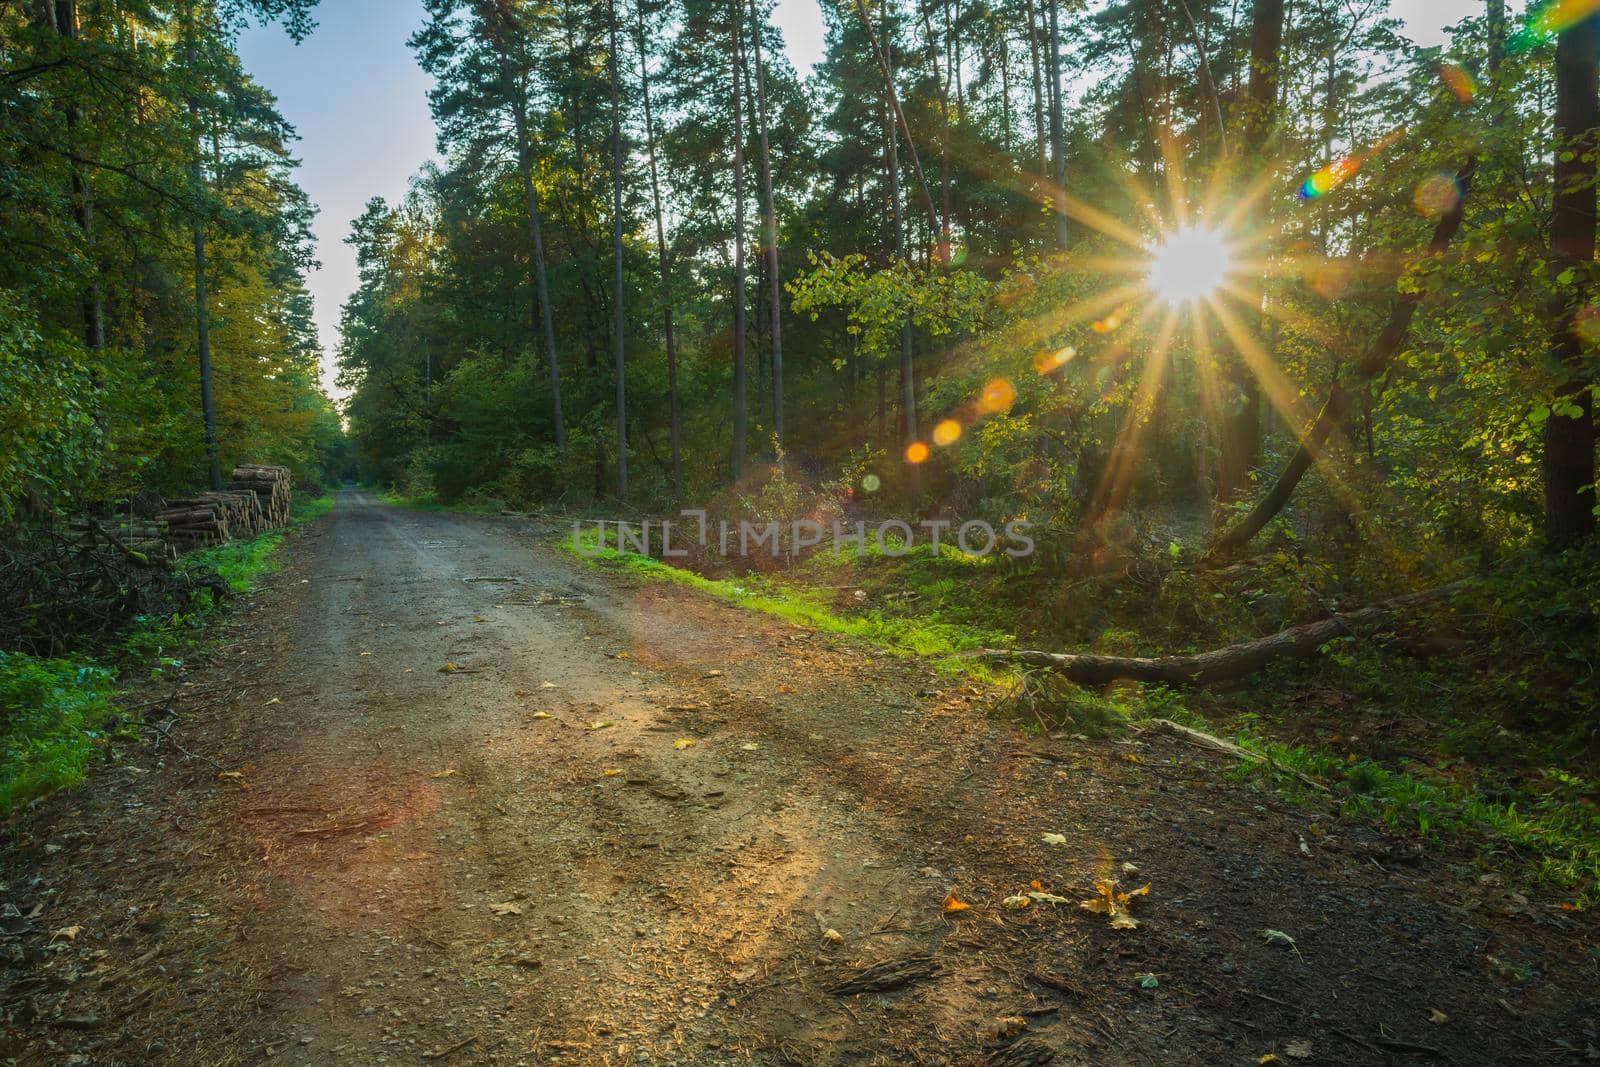 Sun star in dark forest with dirt road by darekb22